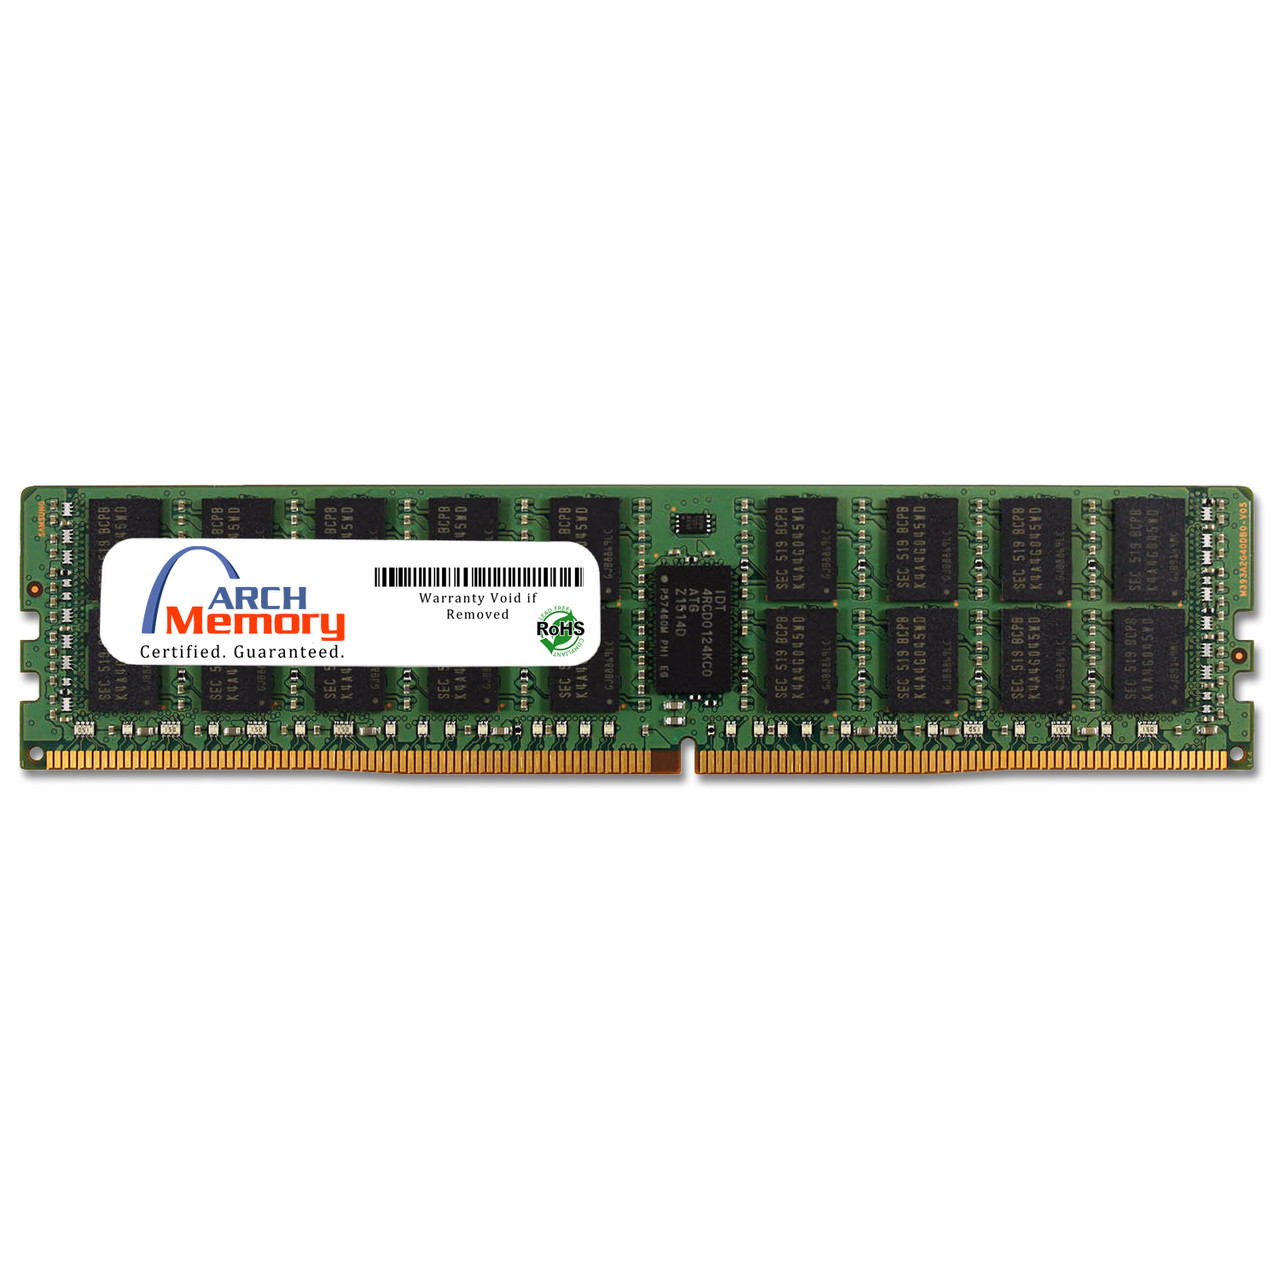 eBay*32GB 288-Pin DDR4-2133 PC4-17000 ECC LRDIMM (4Rx4) Server RAM